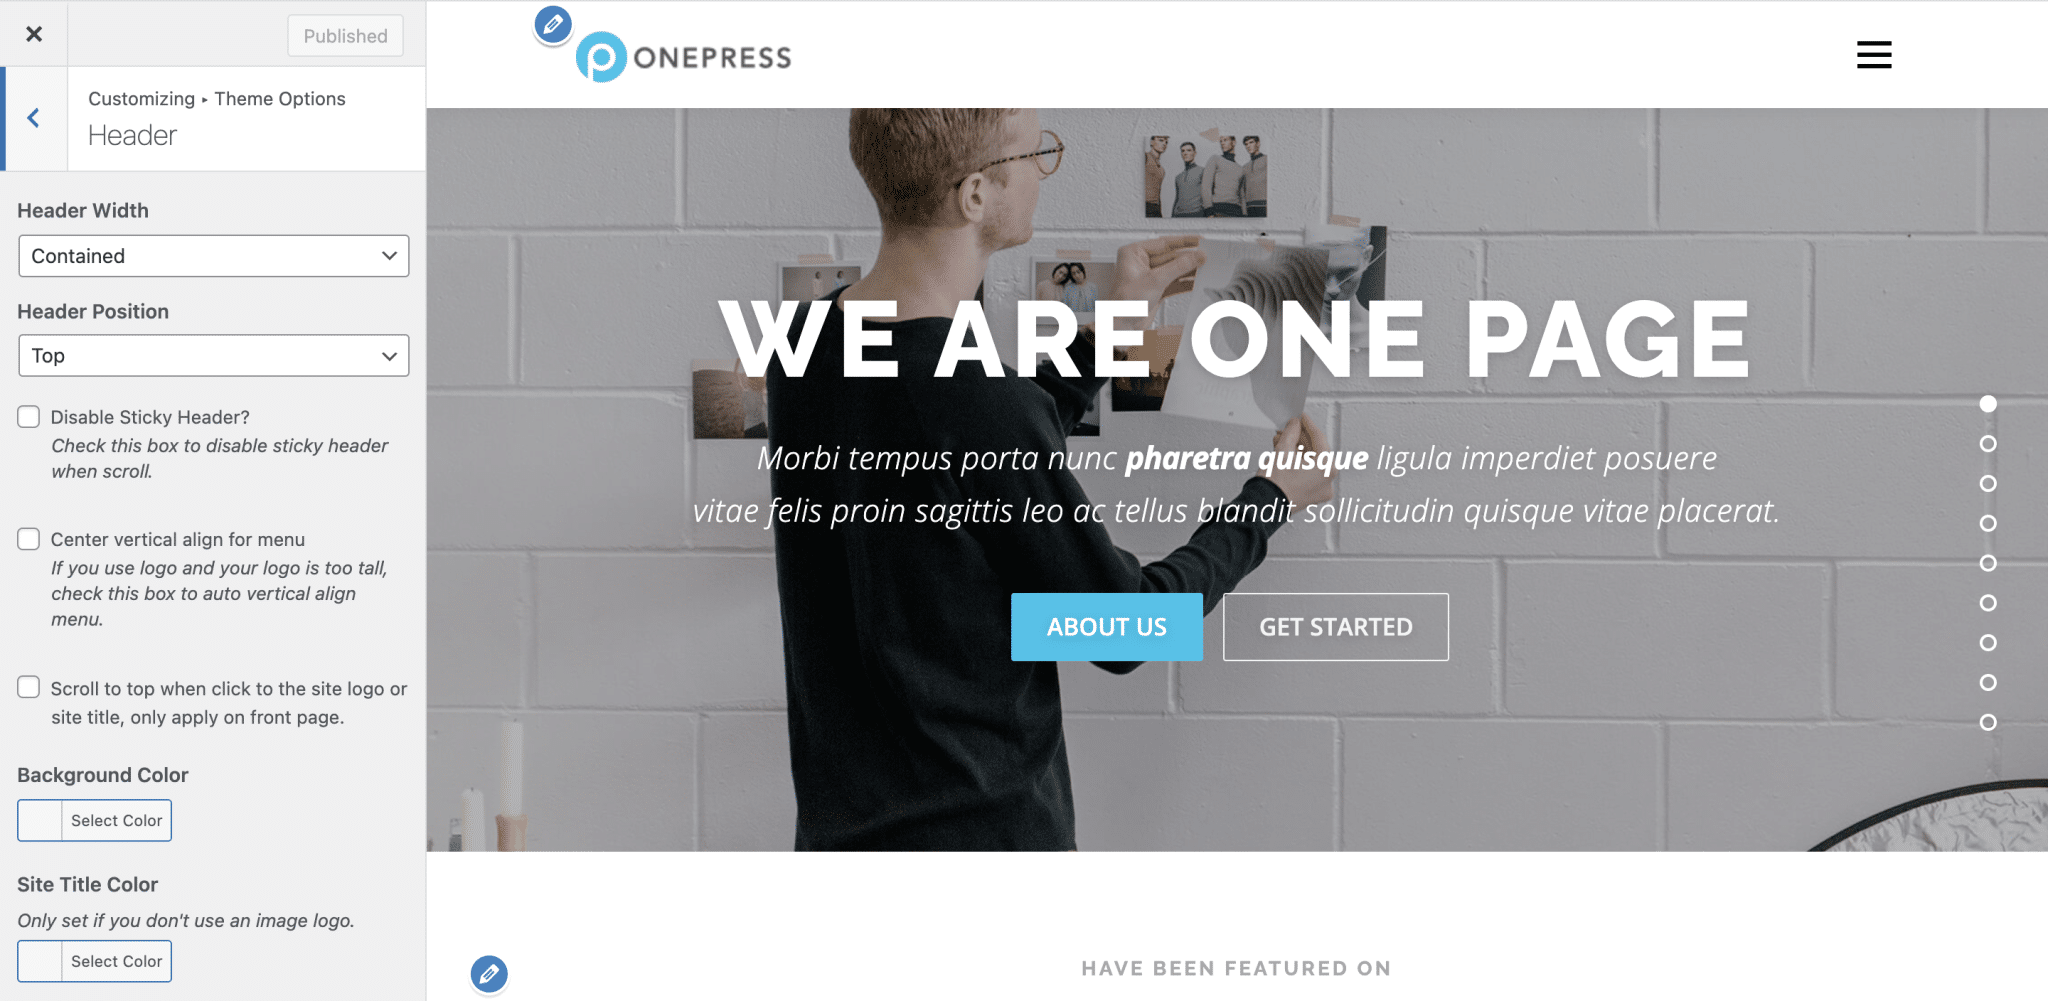 Header customization with the WordPress OnePress theme.